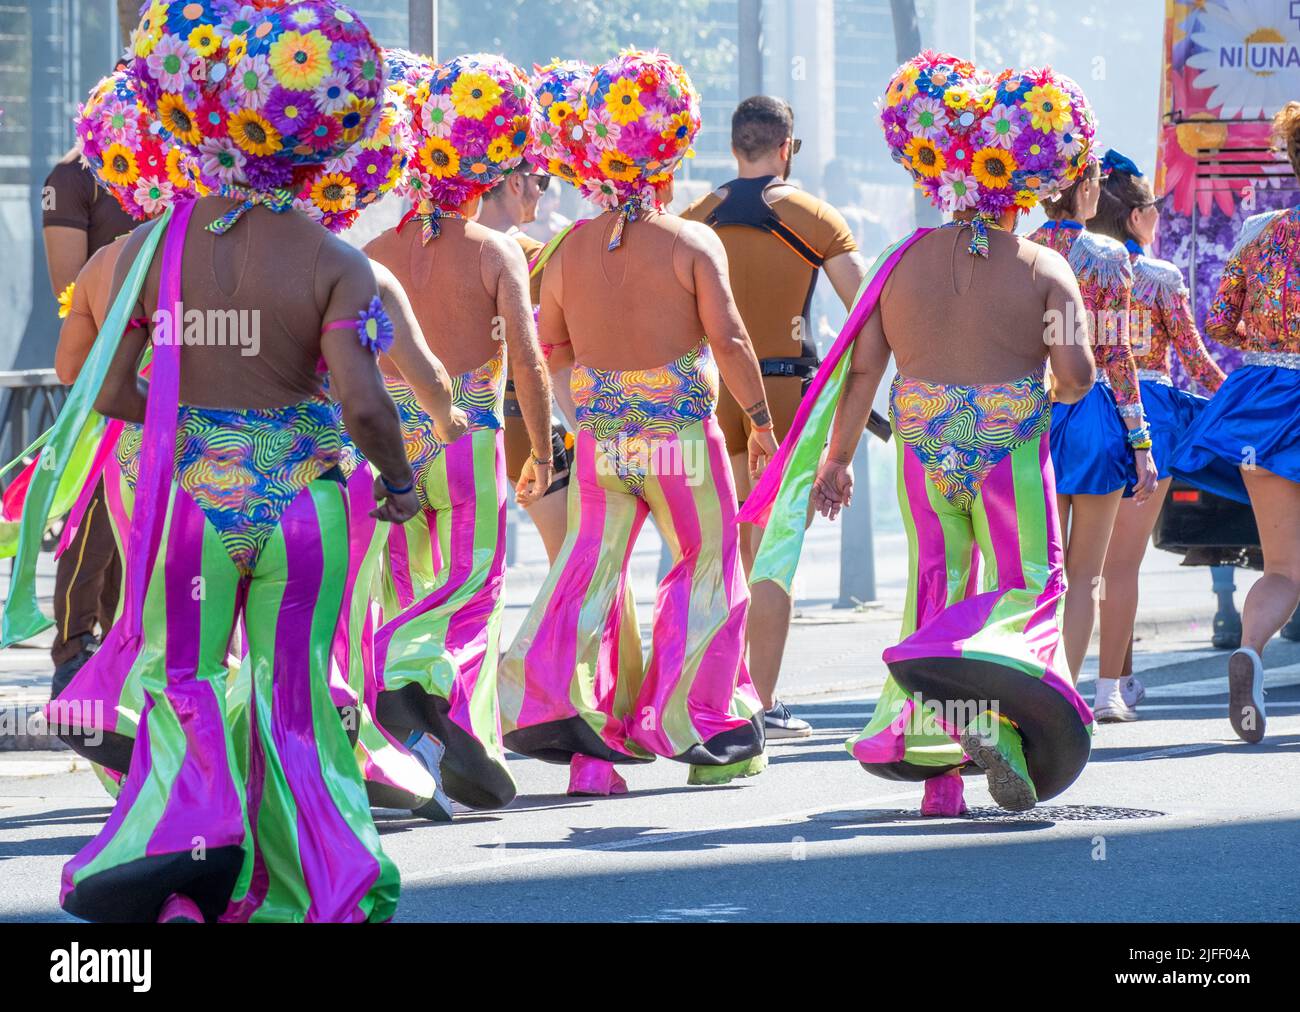 Las Palmas, Gran Canaria, Canary Islands, Spain. 2nd July, 2022. Thousand of people in fancy dress enjoying the Las Palmas Carnival street parade in blazing sunshine. Credit: Alan Dawson/ Alamy Live News. Stock Photo